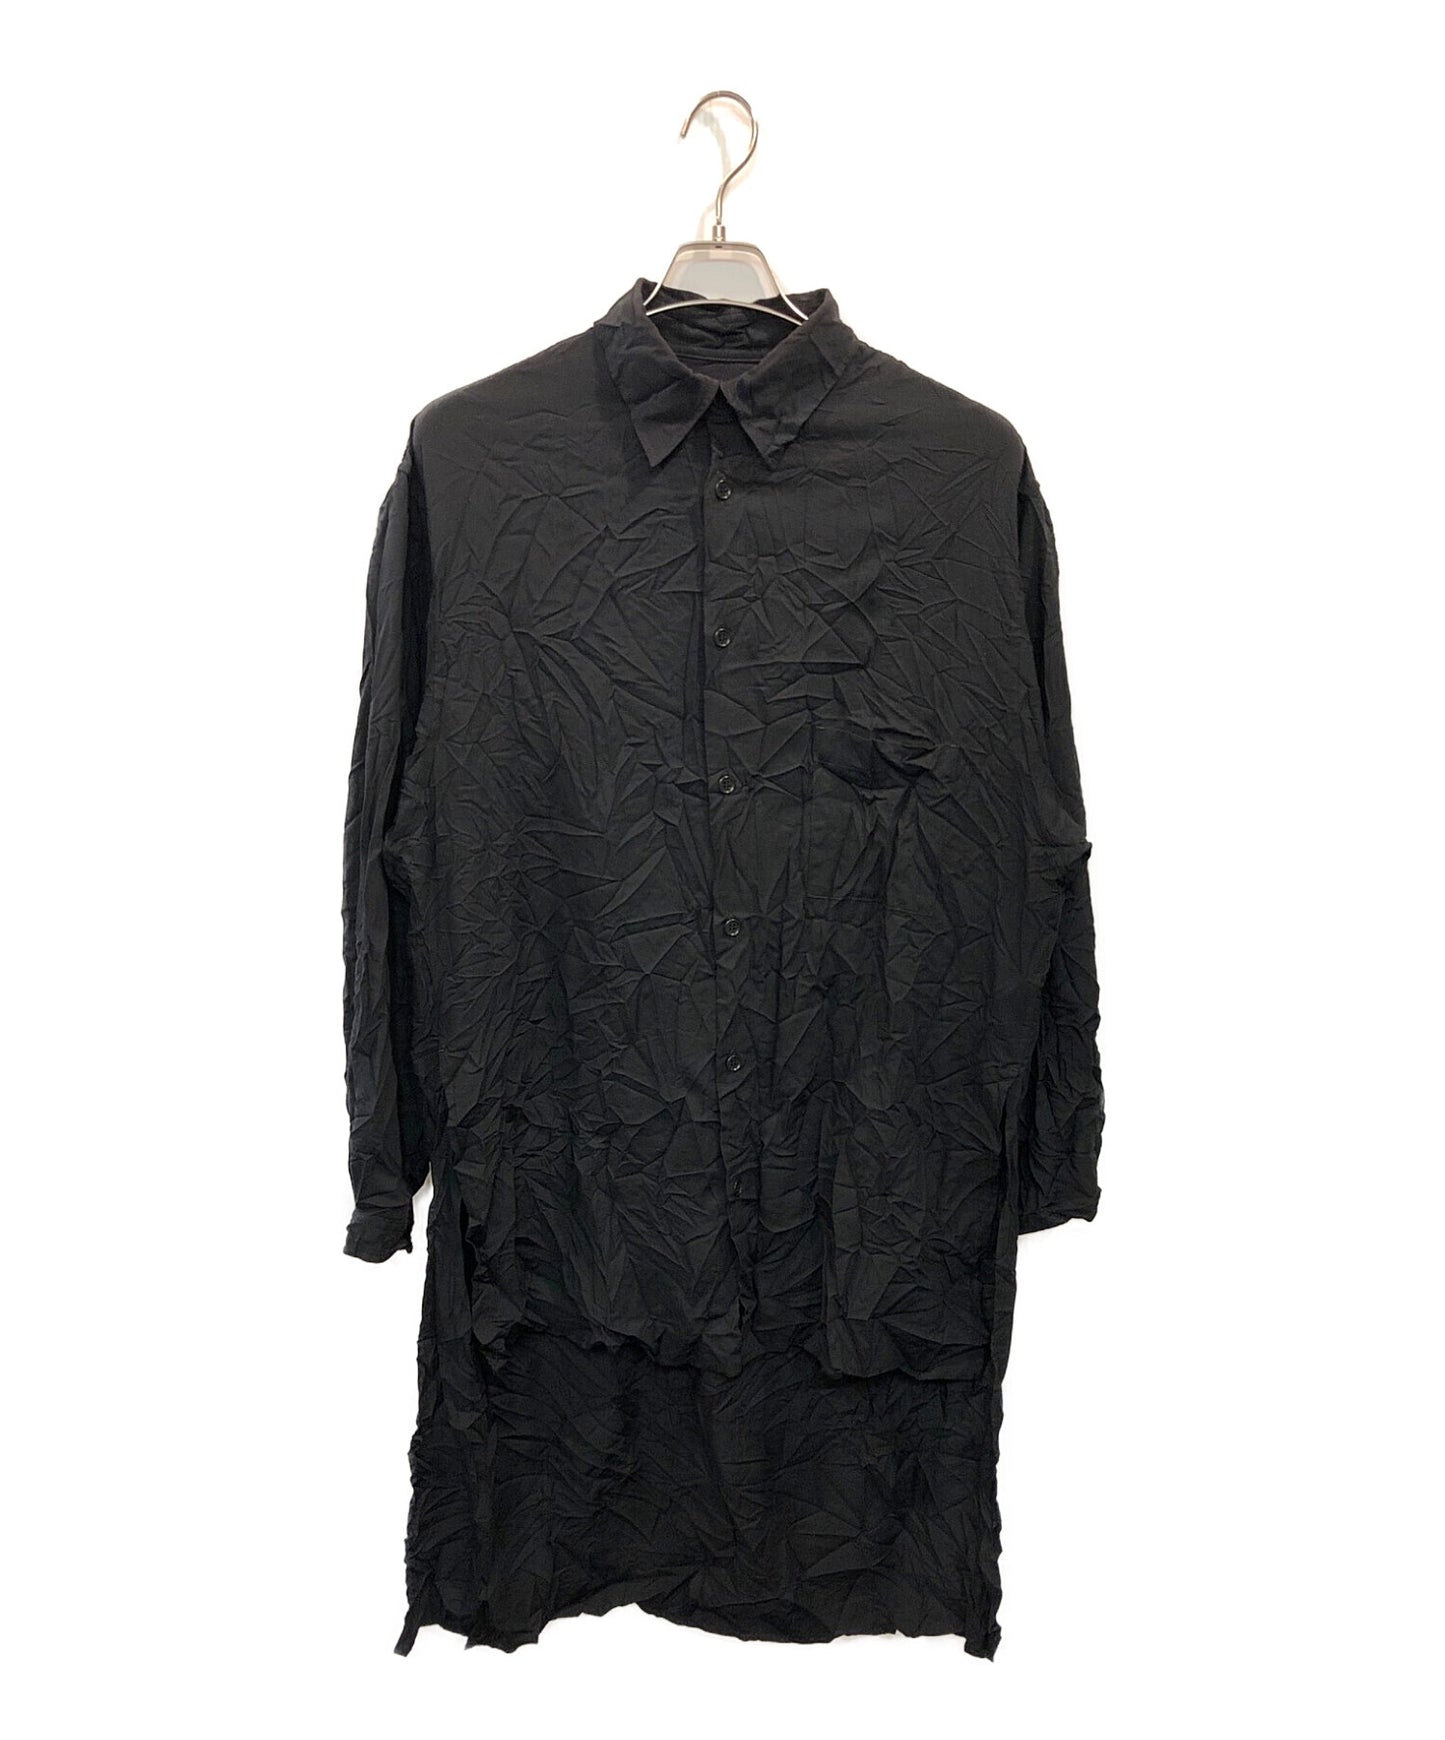 Yohji Yamamoto Pour Homme Twill皱纹完成员工衬衫HW-B09-941